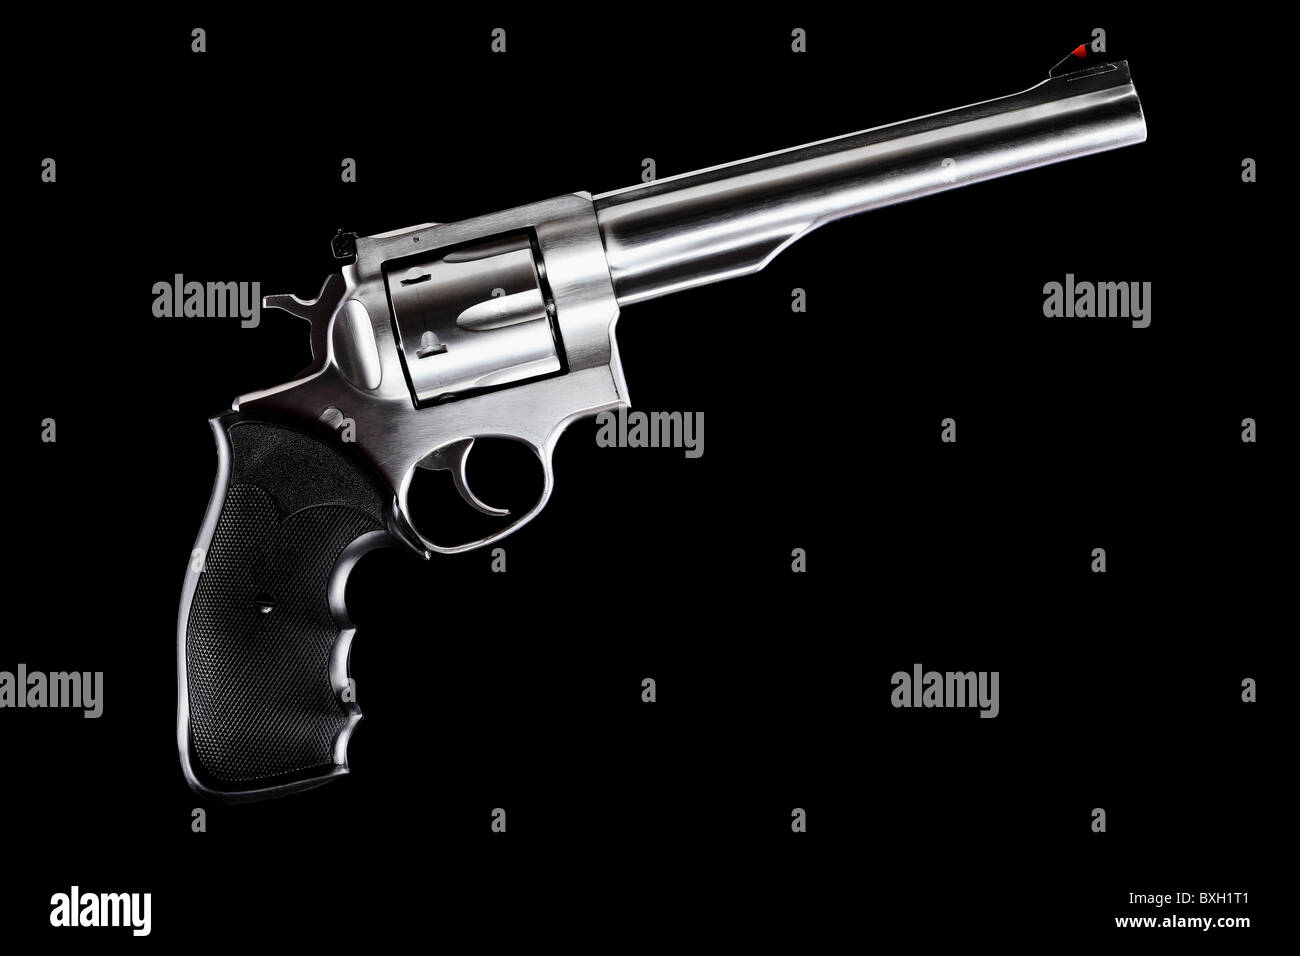 revolver against black background, 44 magnum caliber Stock Photo